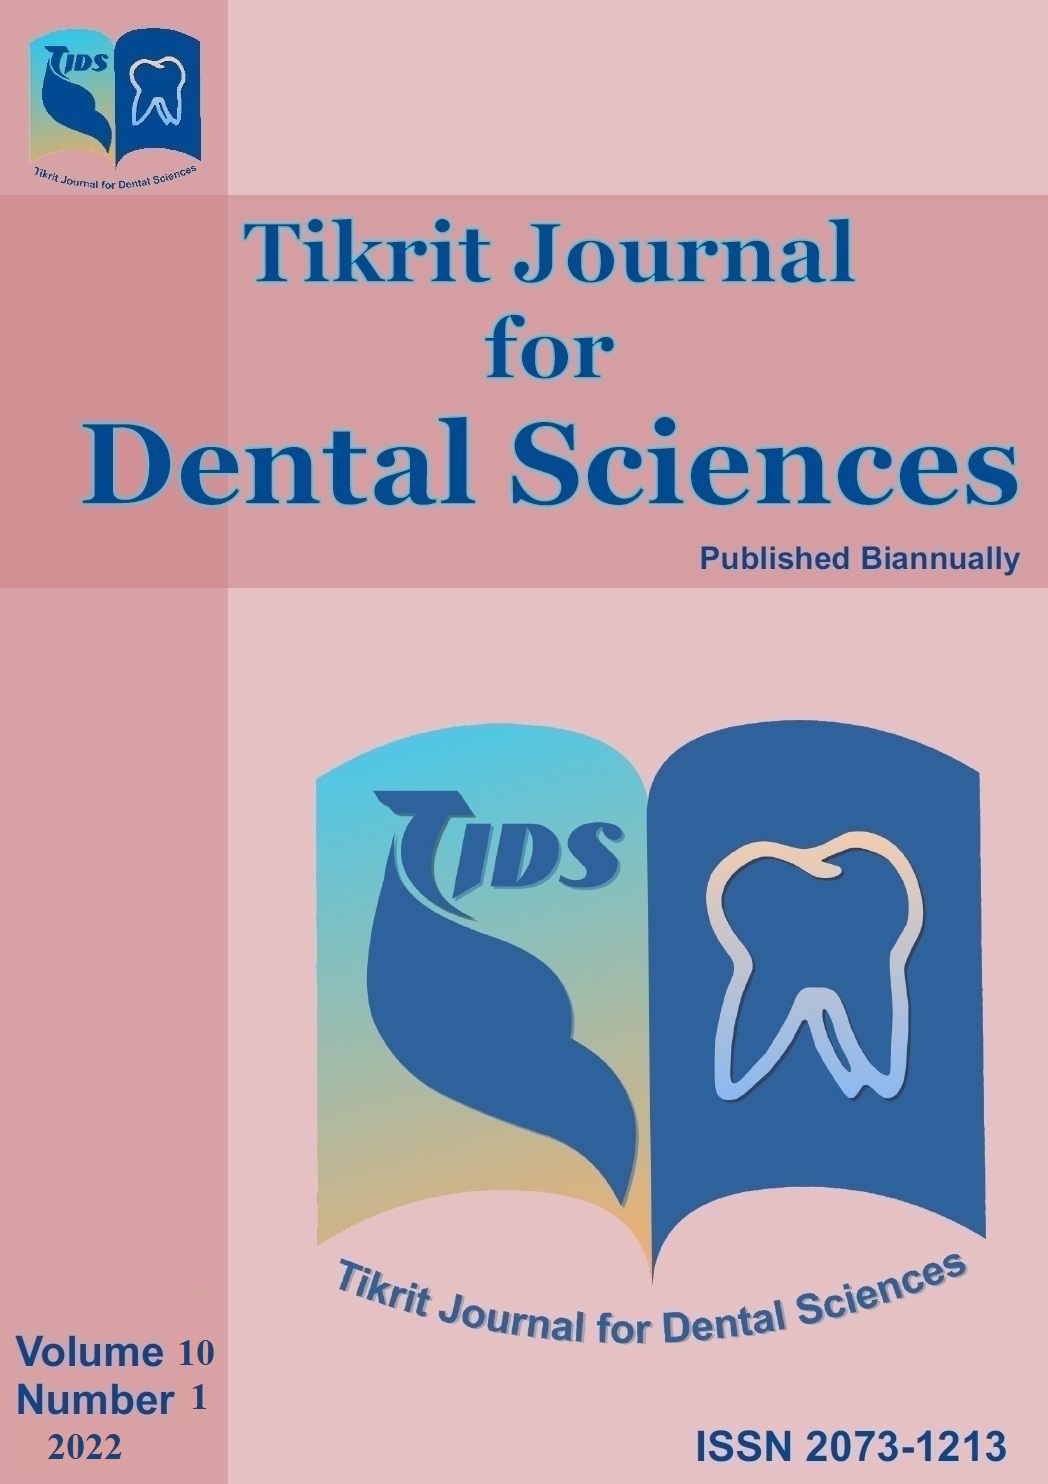                         View Vol. 10 No. 1 (2022): Tikrit Journal for Dental Sciences
                    